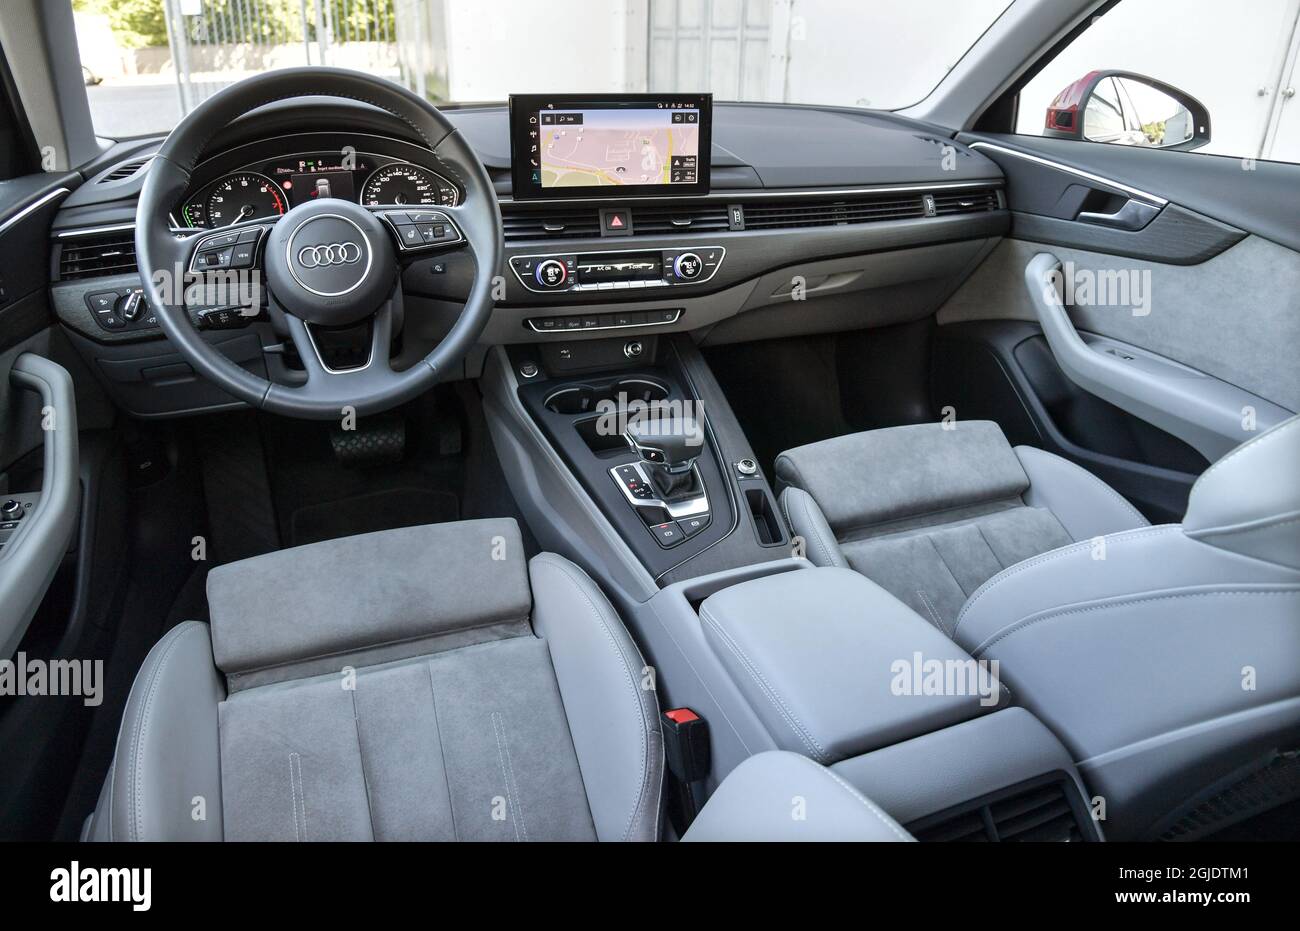 Audi a4 avant e imágenes alta resolución Alamy